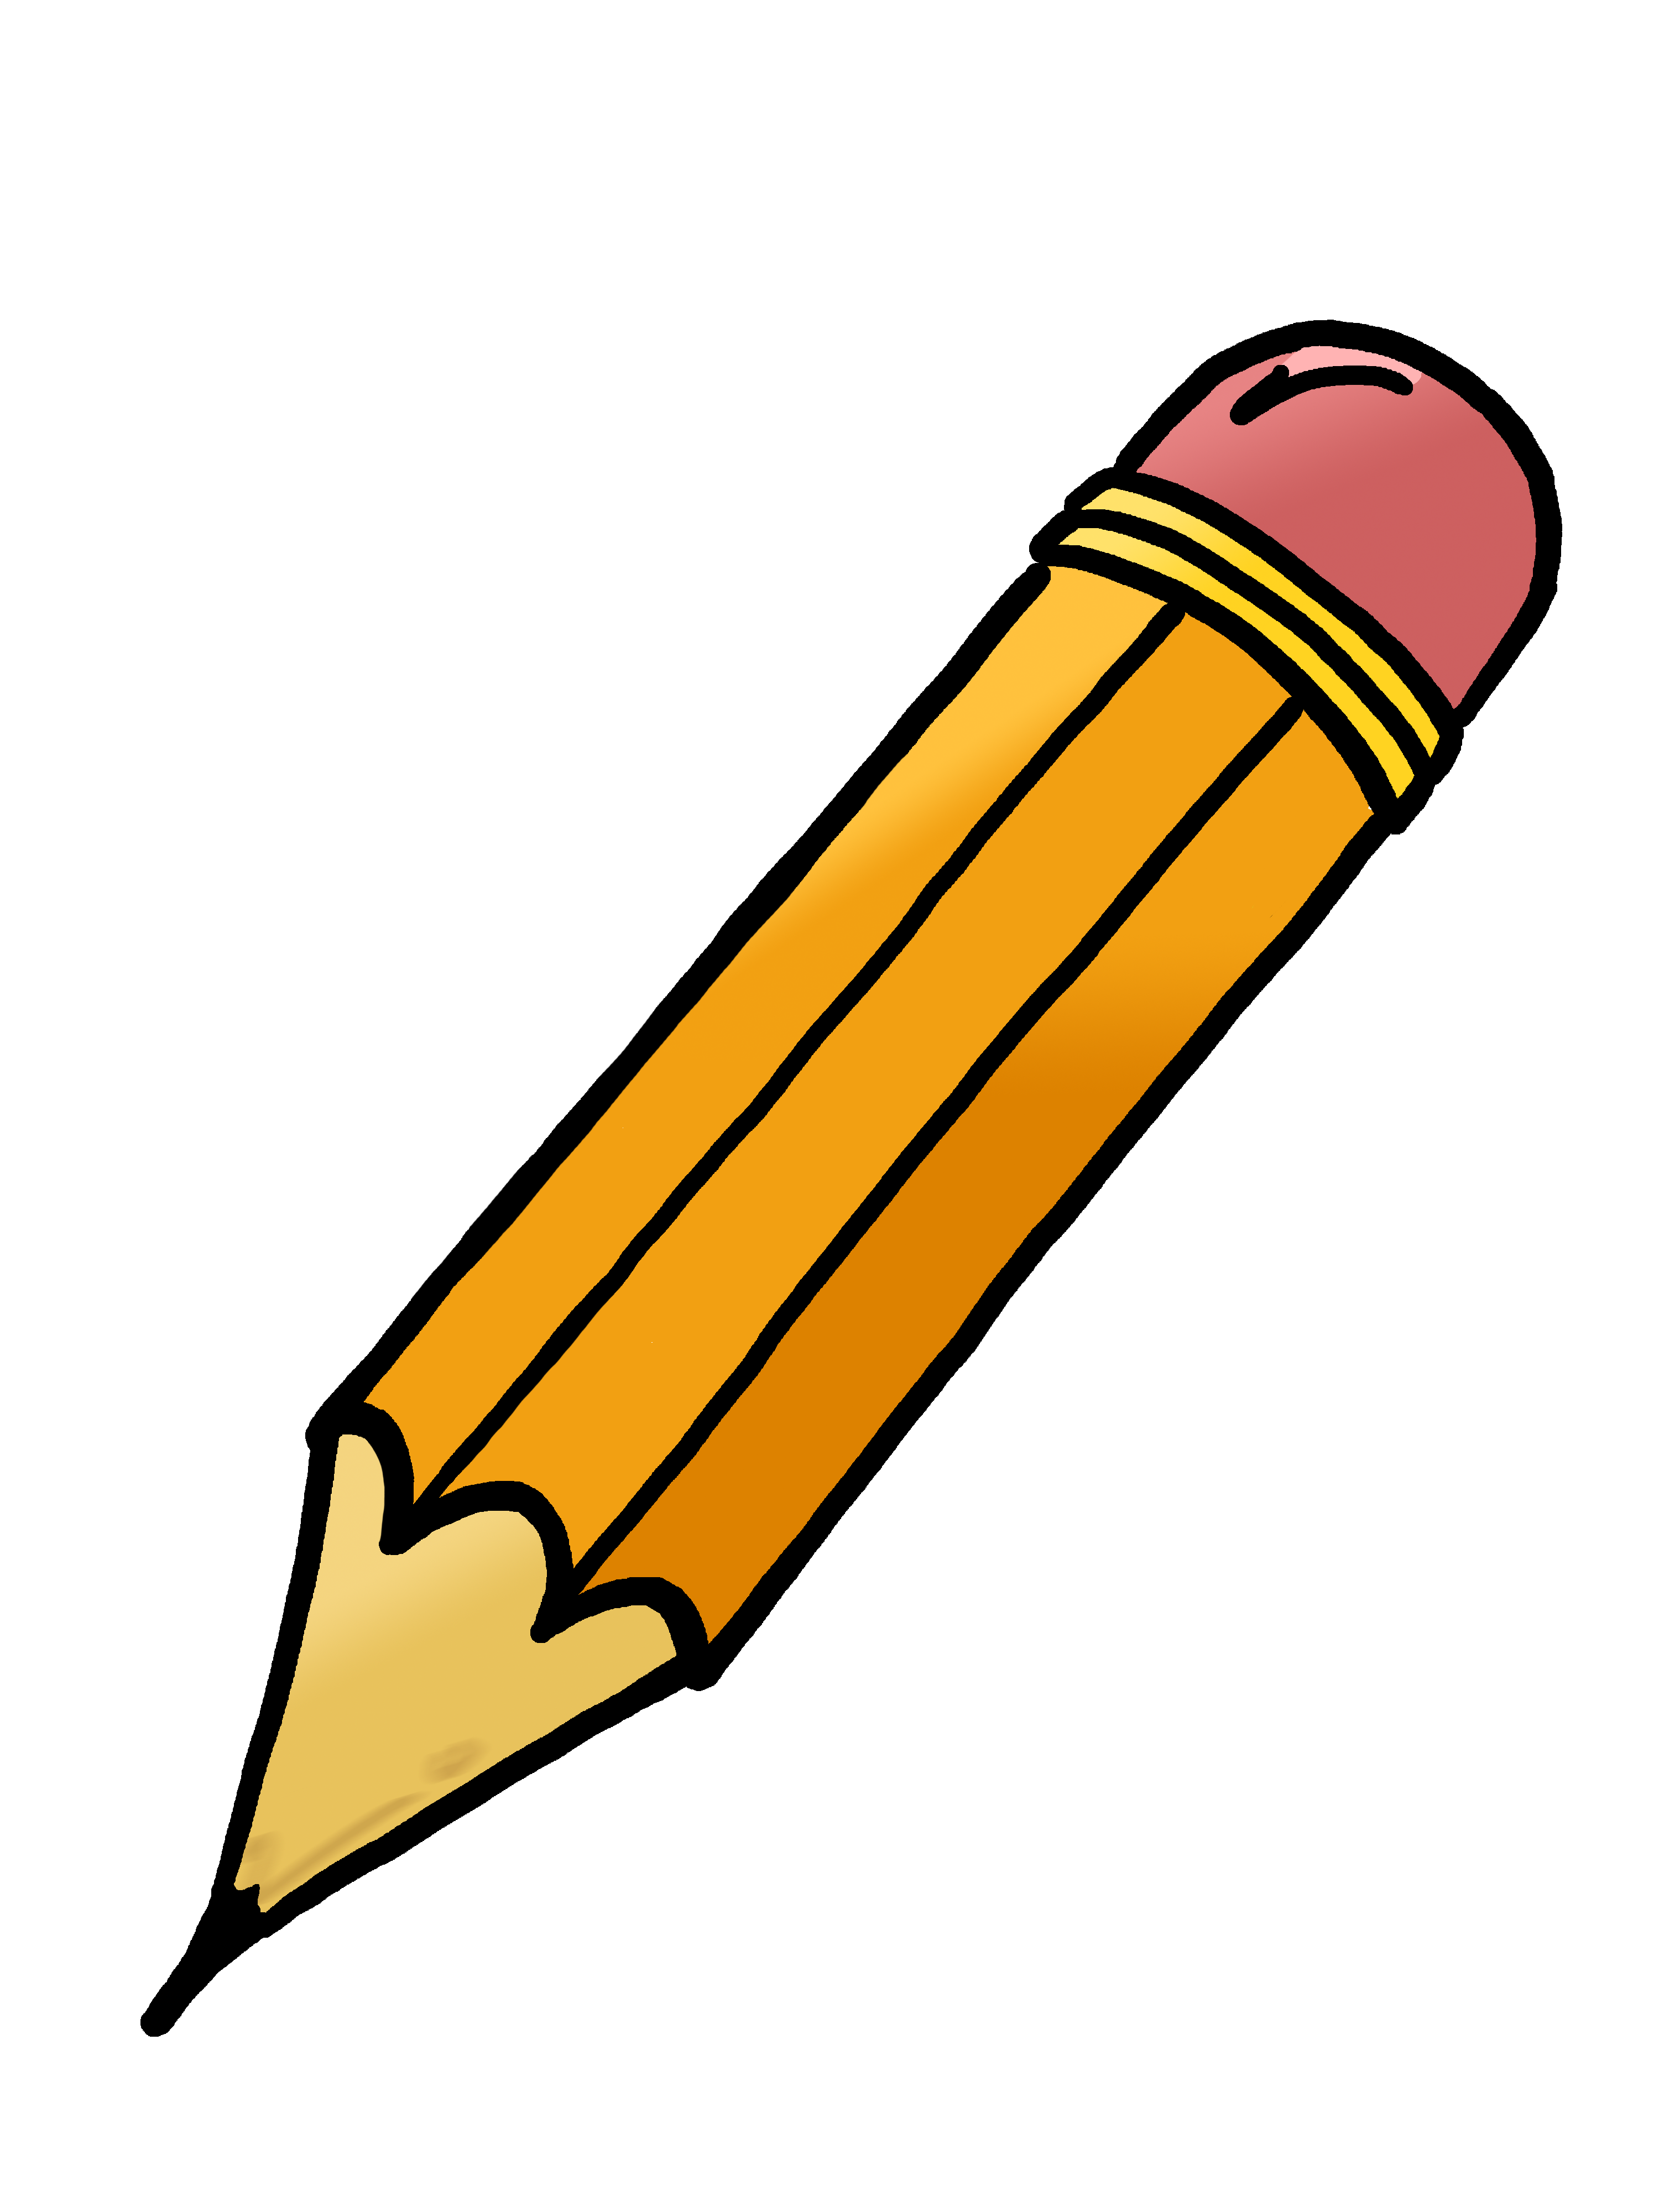 journal clipart pencil